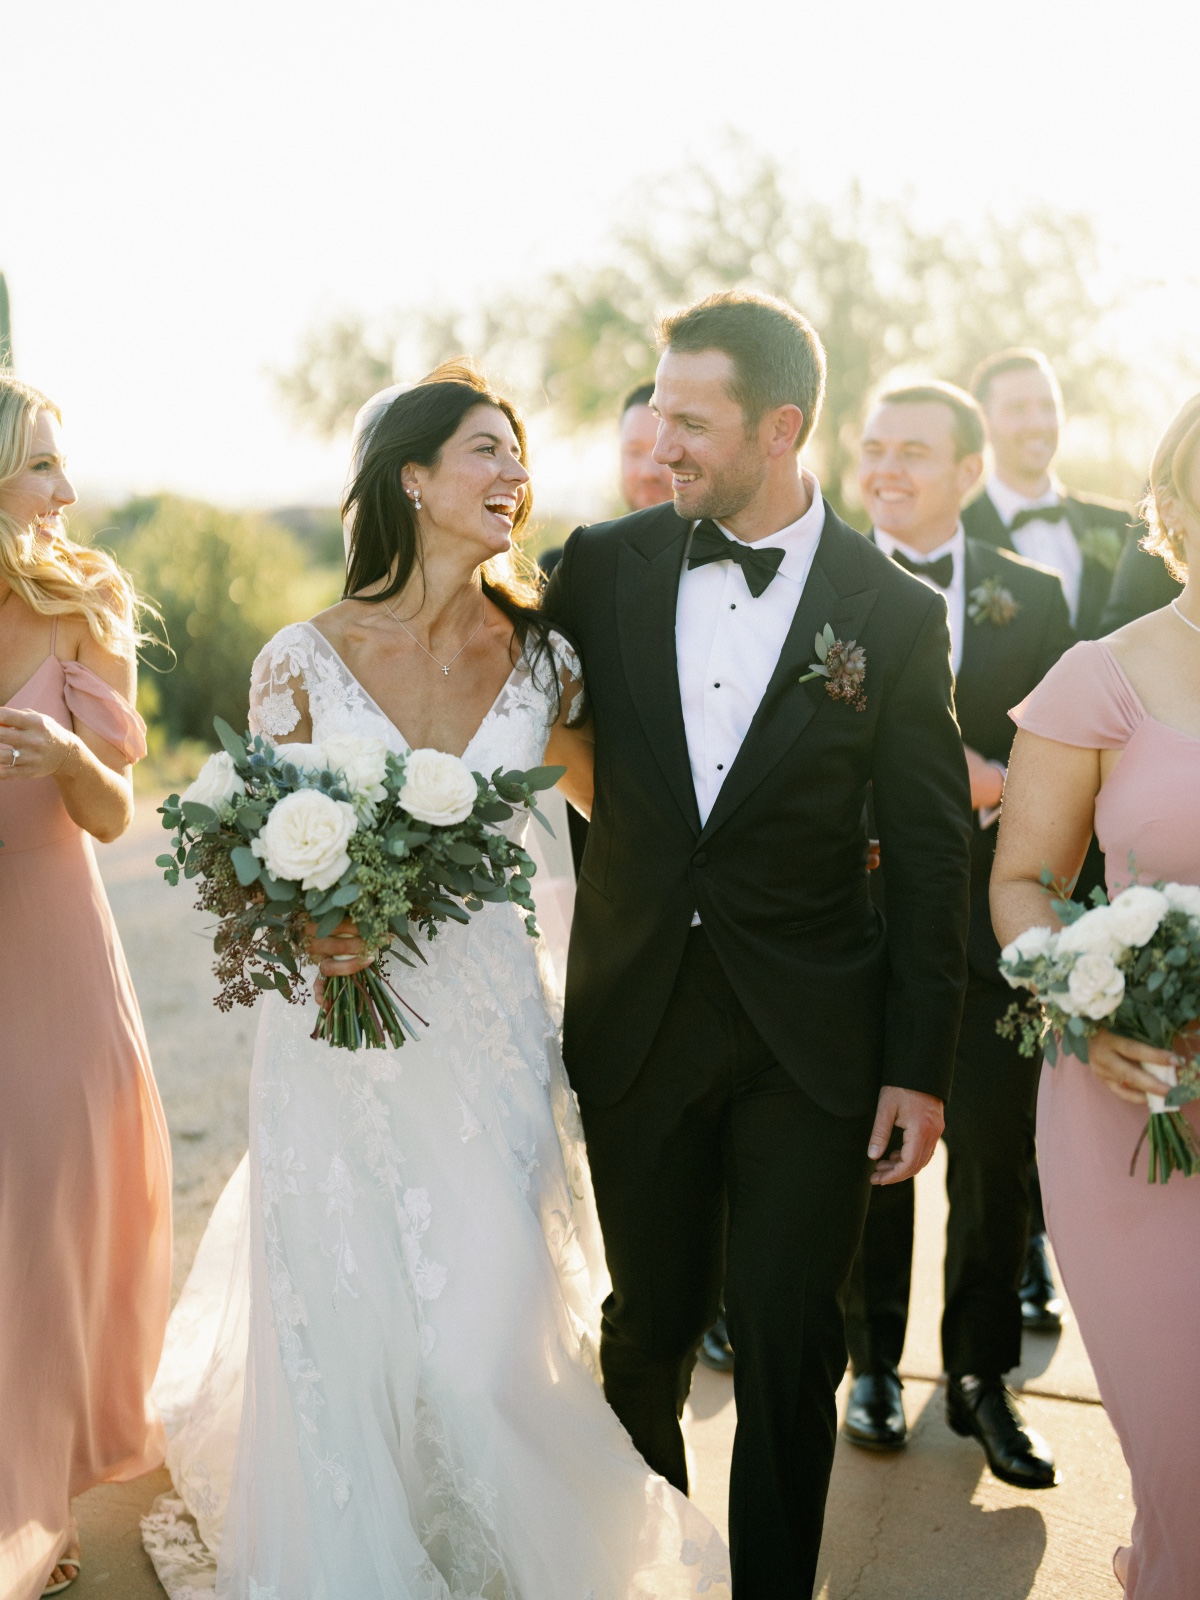 Romantic blush wedding with a sense of humor in the Arizona desert